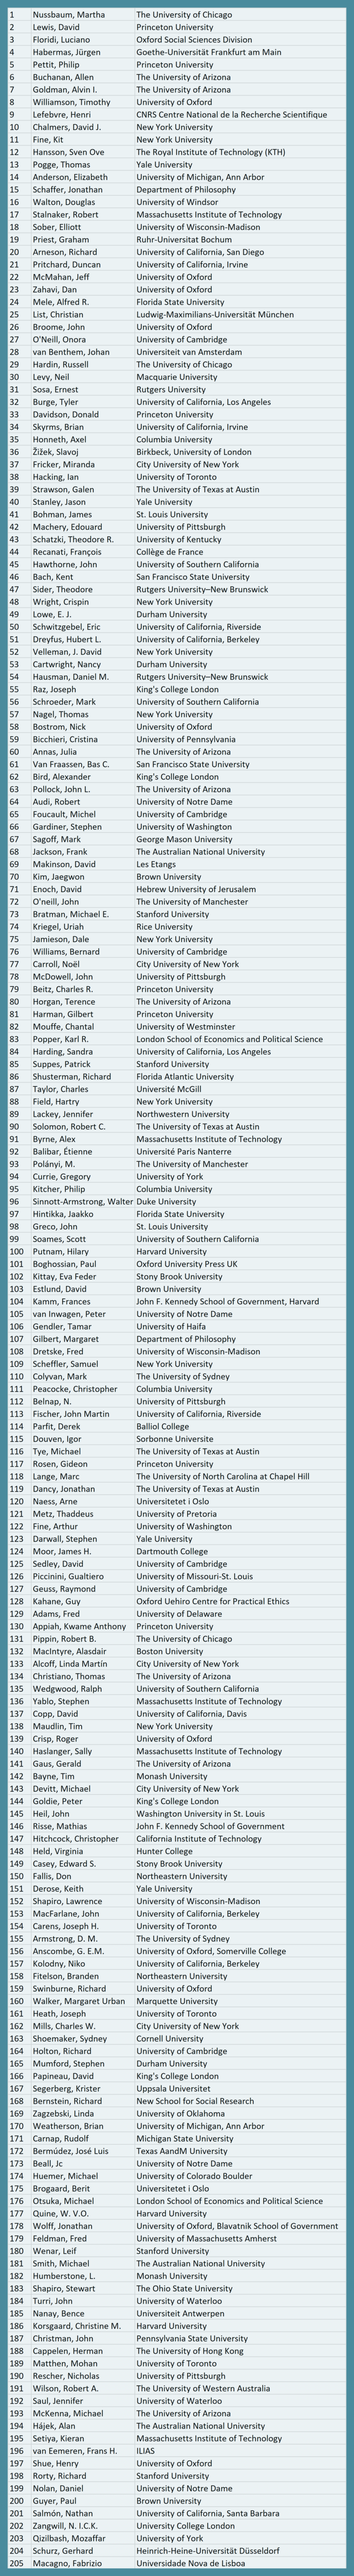 citation-rankings-of-philosophers-based-on-scopus-data-updated